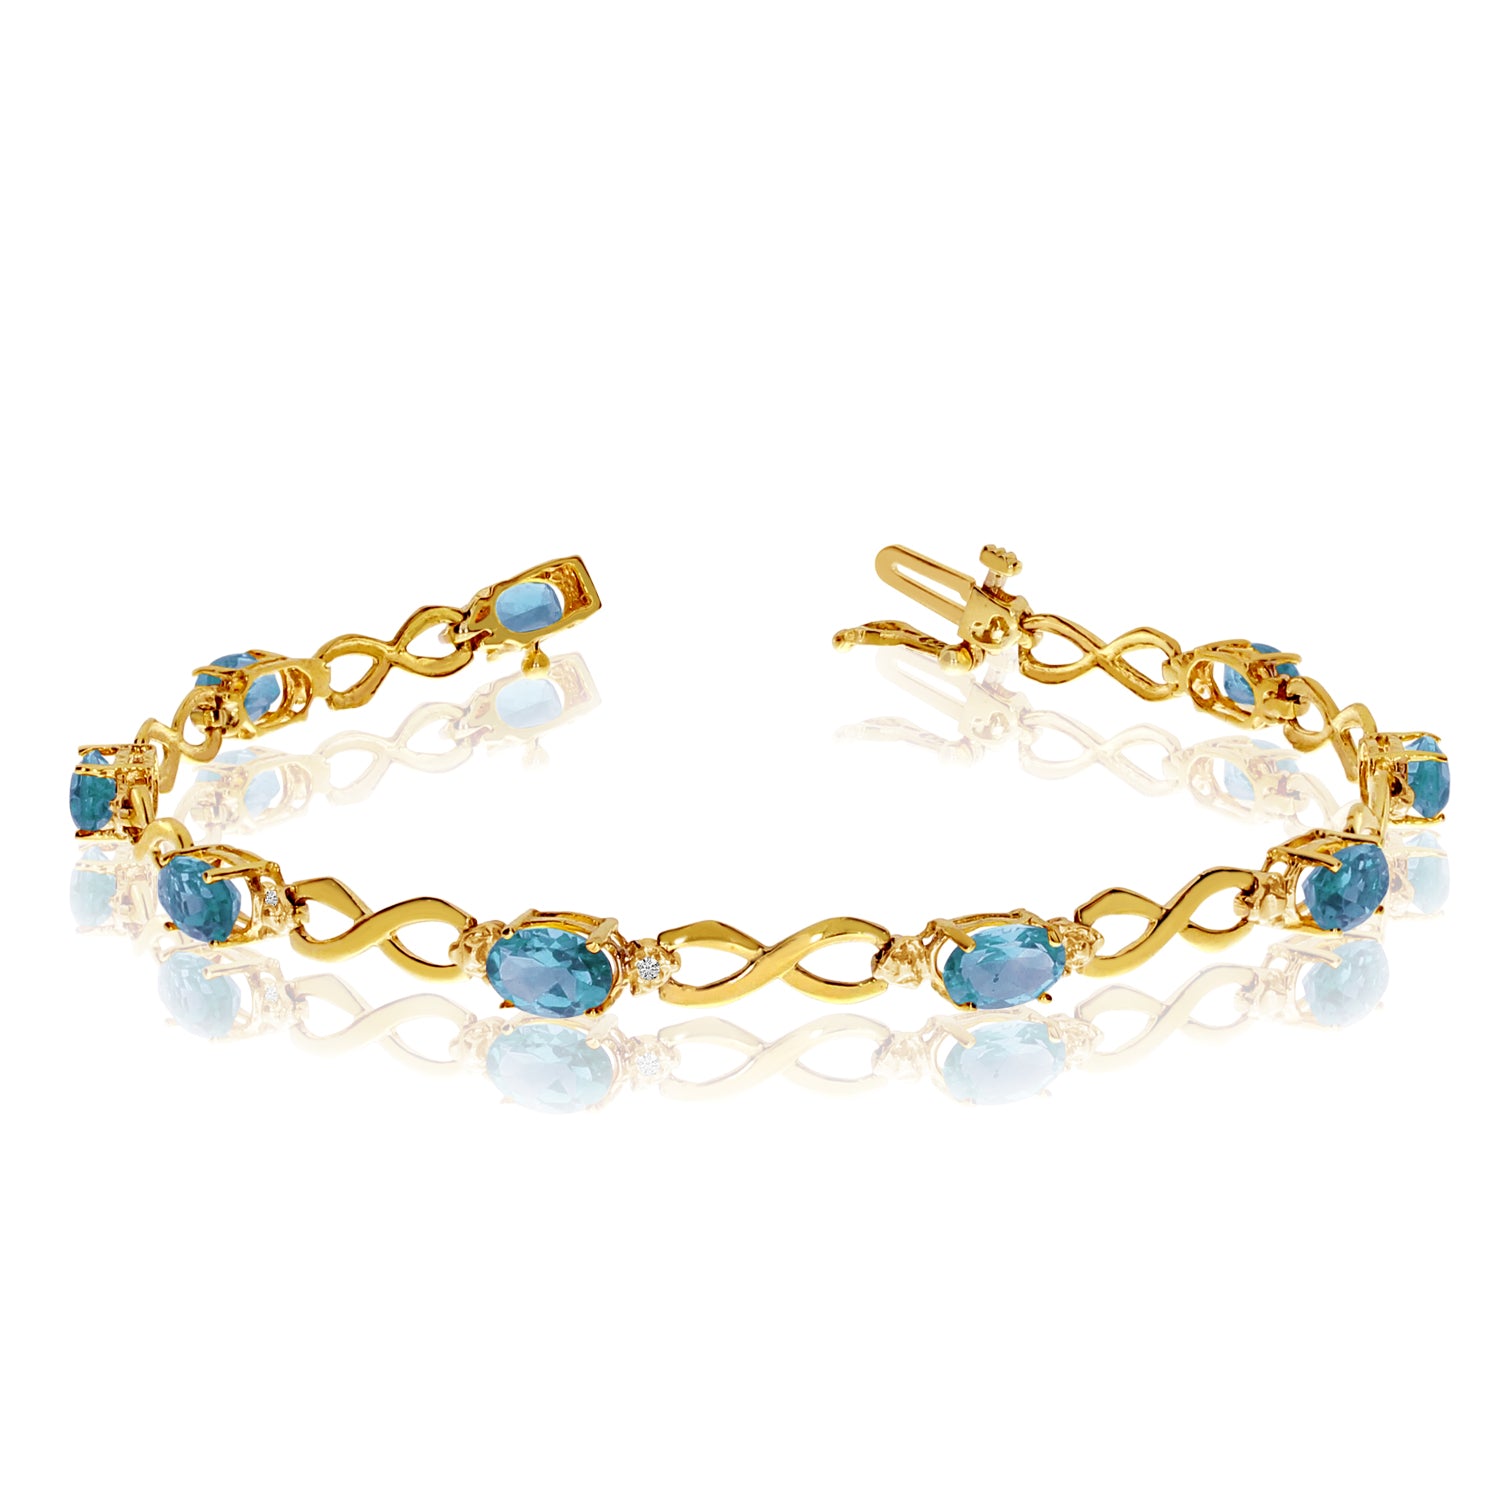 10K Yellow Gold Oval Blue Topaz Stones And Diamonds Infinity Tennis Bracelet, 7" fine designer jewelry for men and women